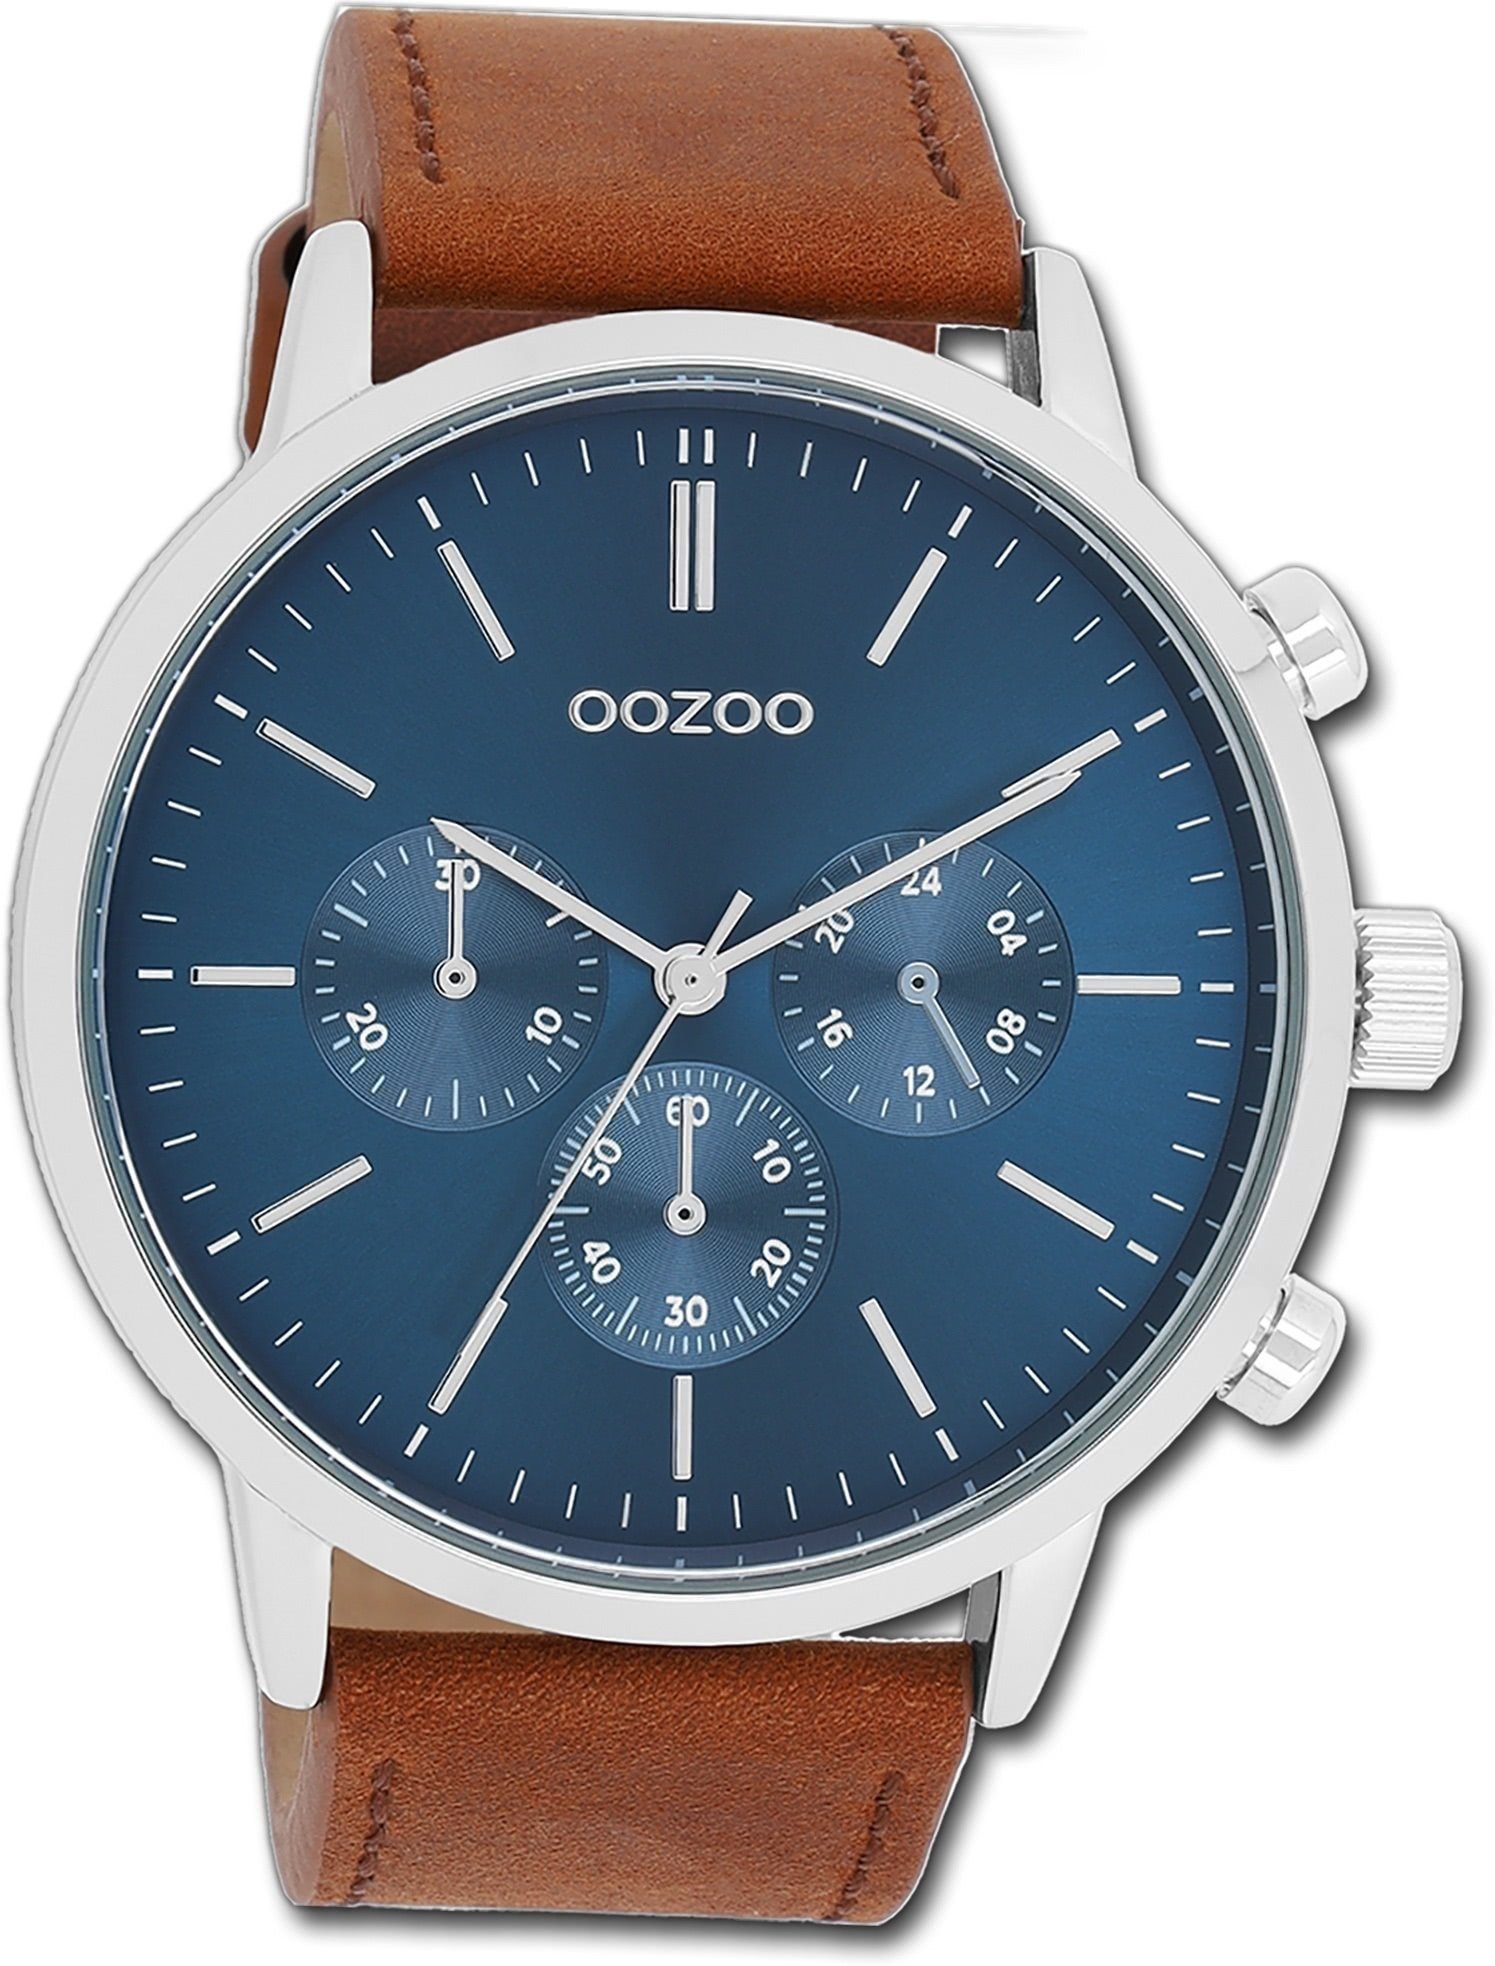 Herrenuhr groß braun, Armbanduhr rundes Oozoo Gehäuse, Timepieces, 50mm) OOZOO extra Herren Lederarmband Quarzuhr (ca.